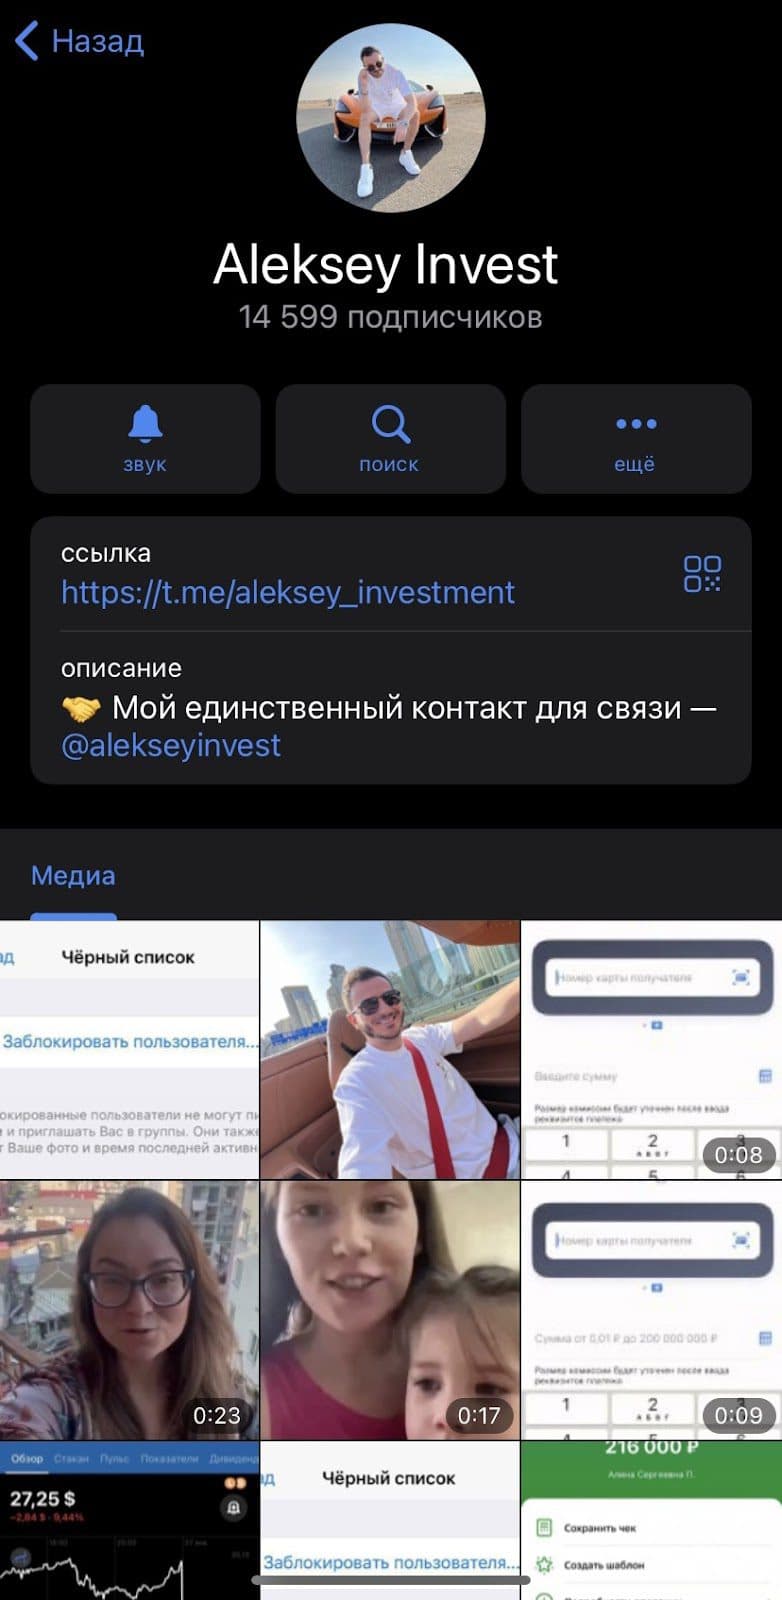 Aleksey Invest телеграмм